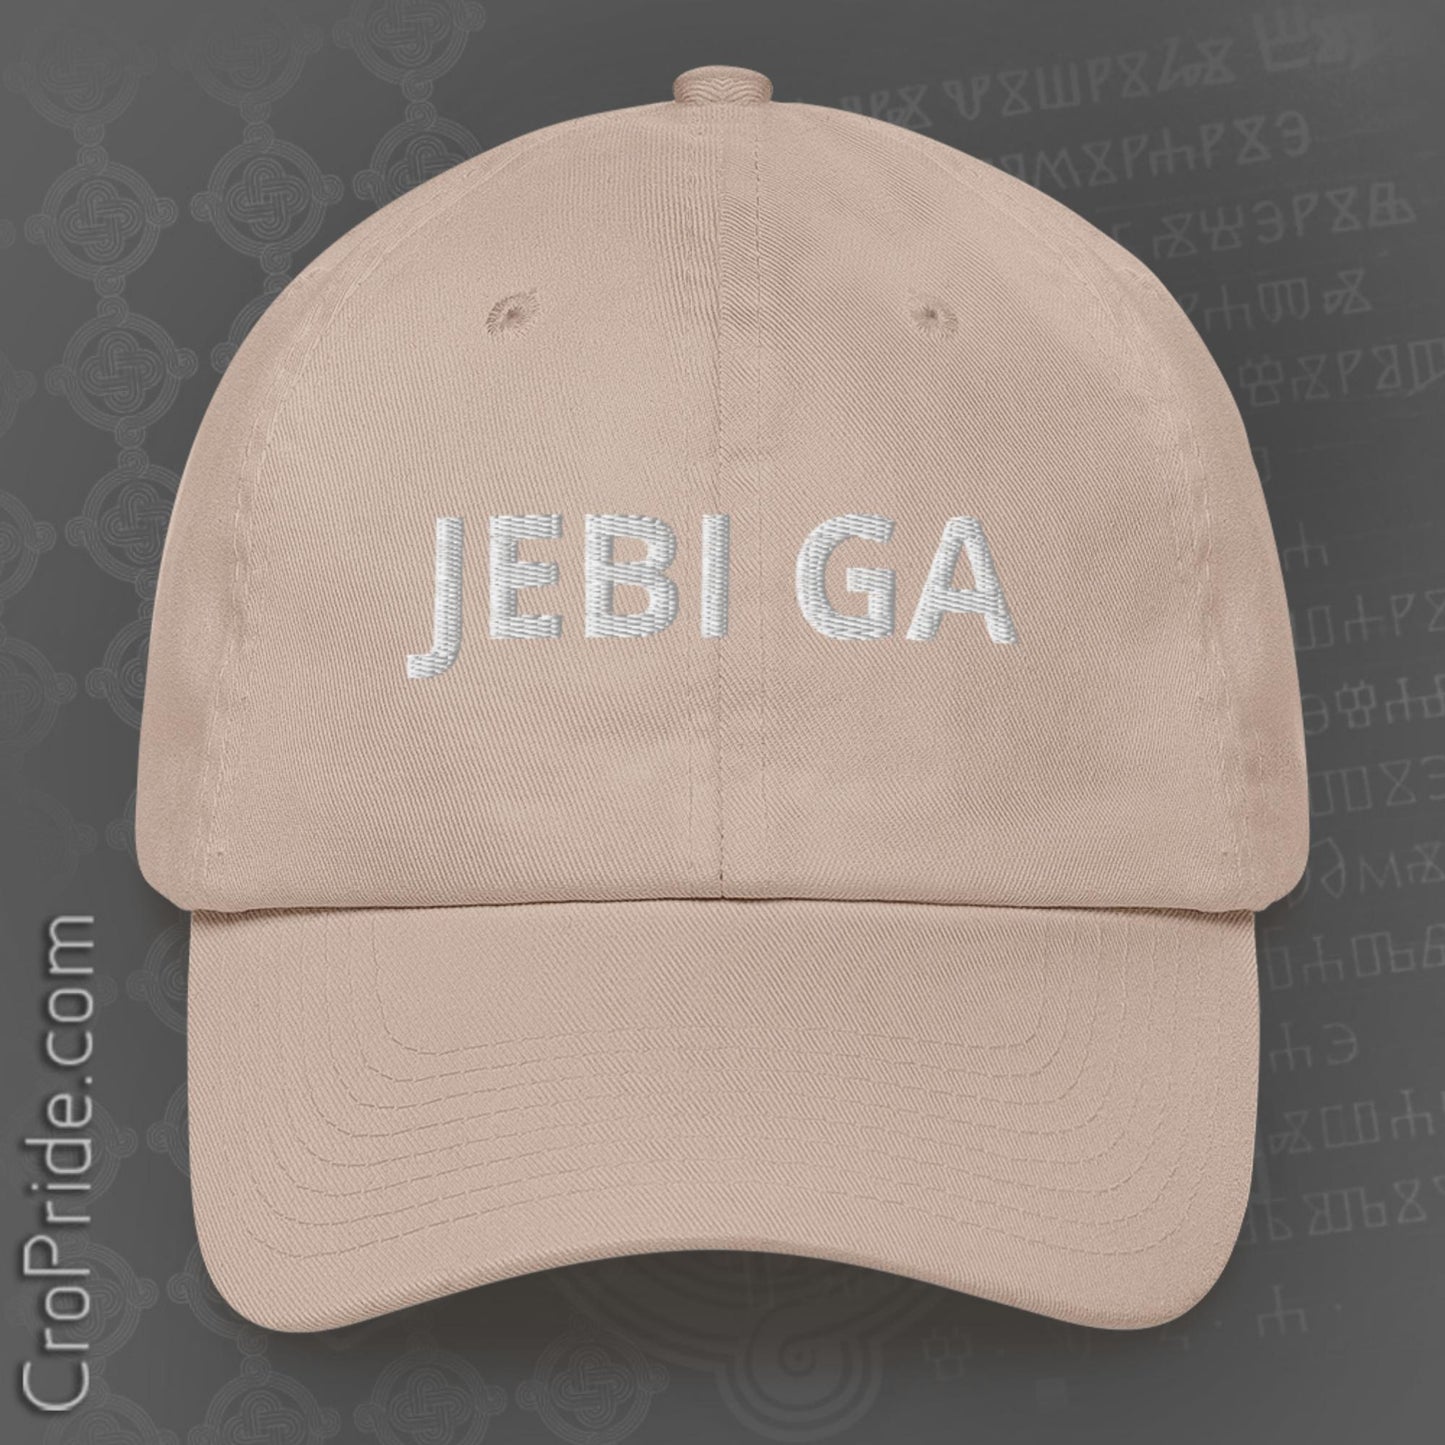 CroPride Gear "Jebi Ga" Hat - Make a Bold Statement